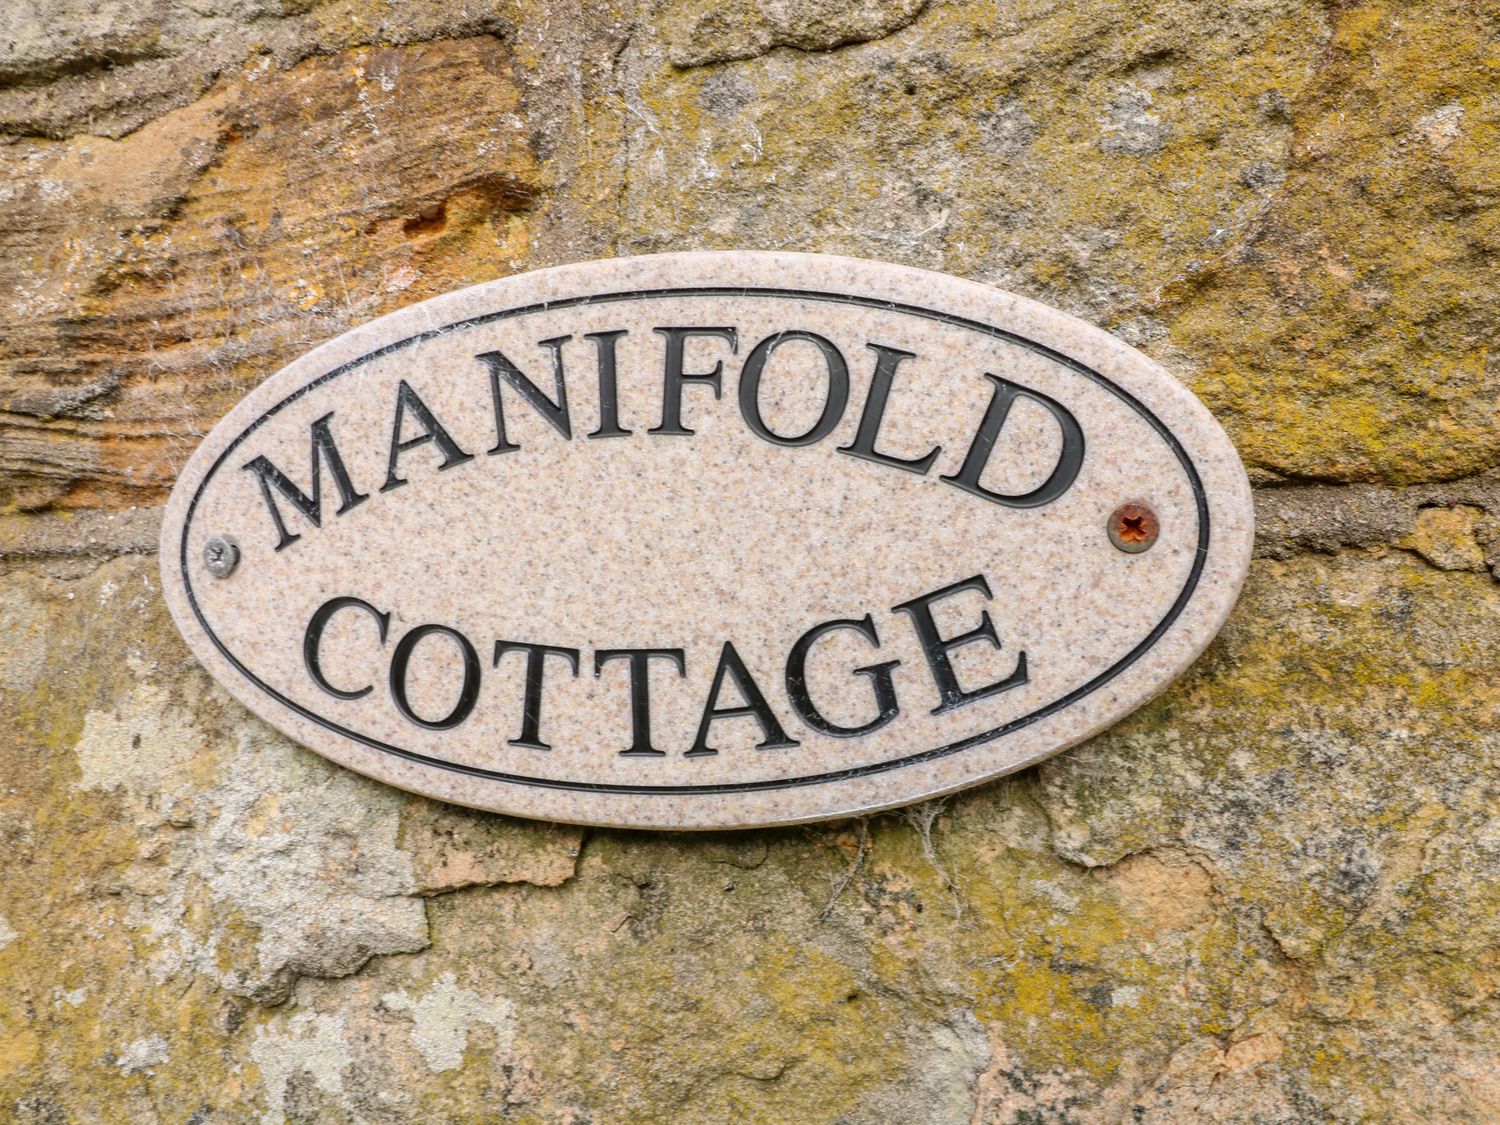 Manifold Cottage, Peak District